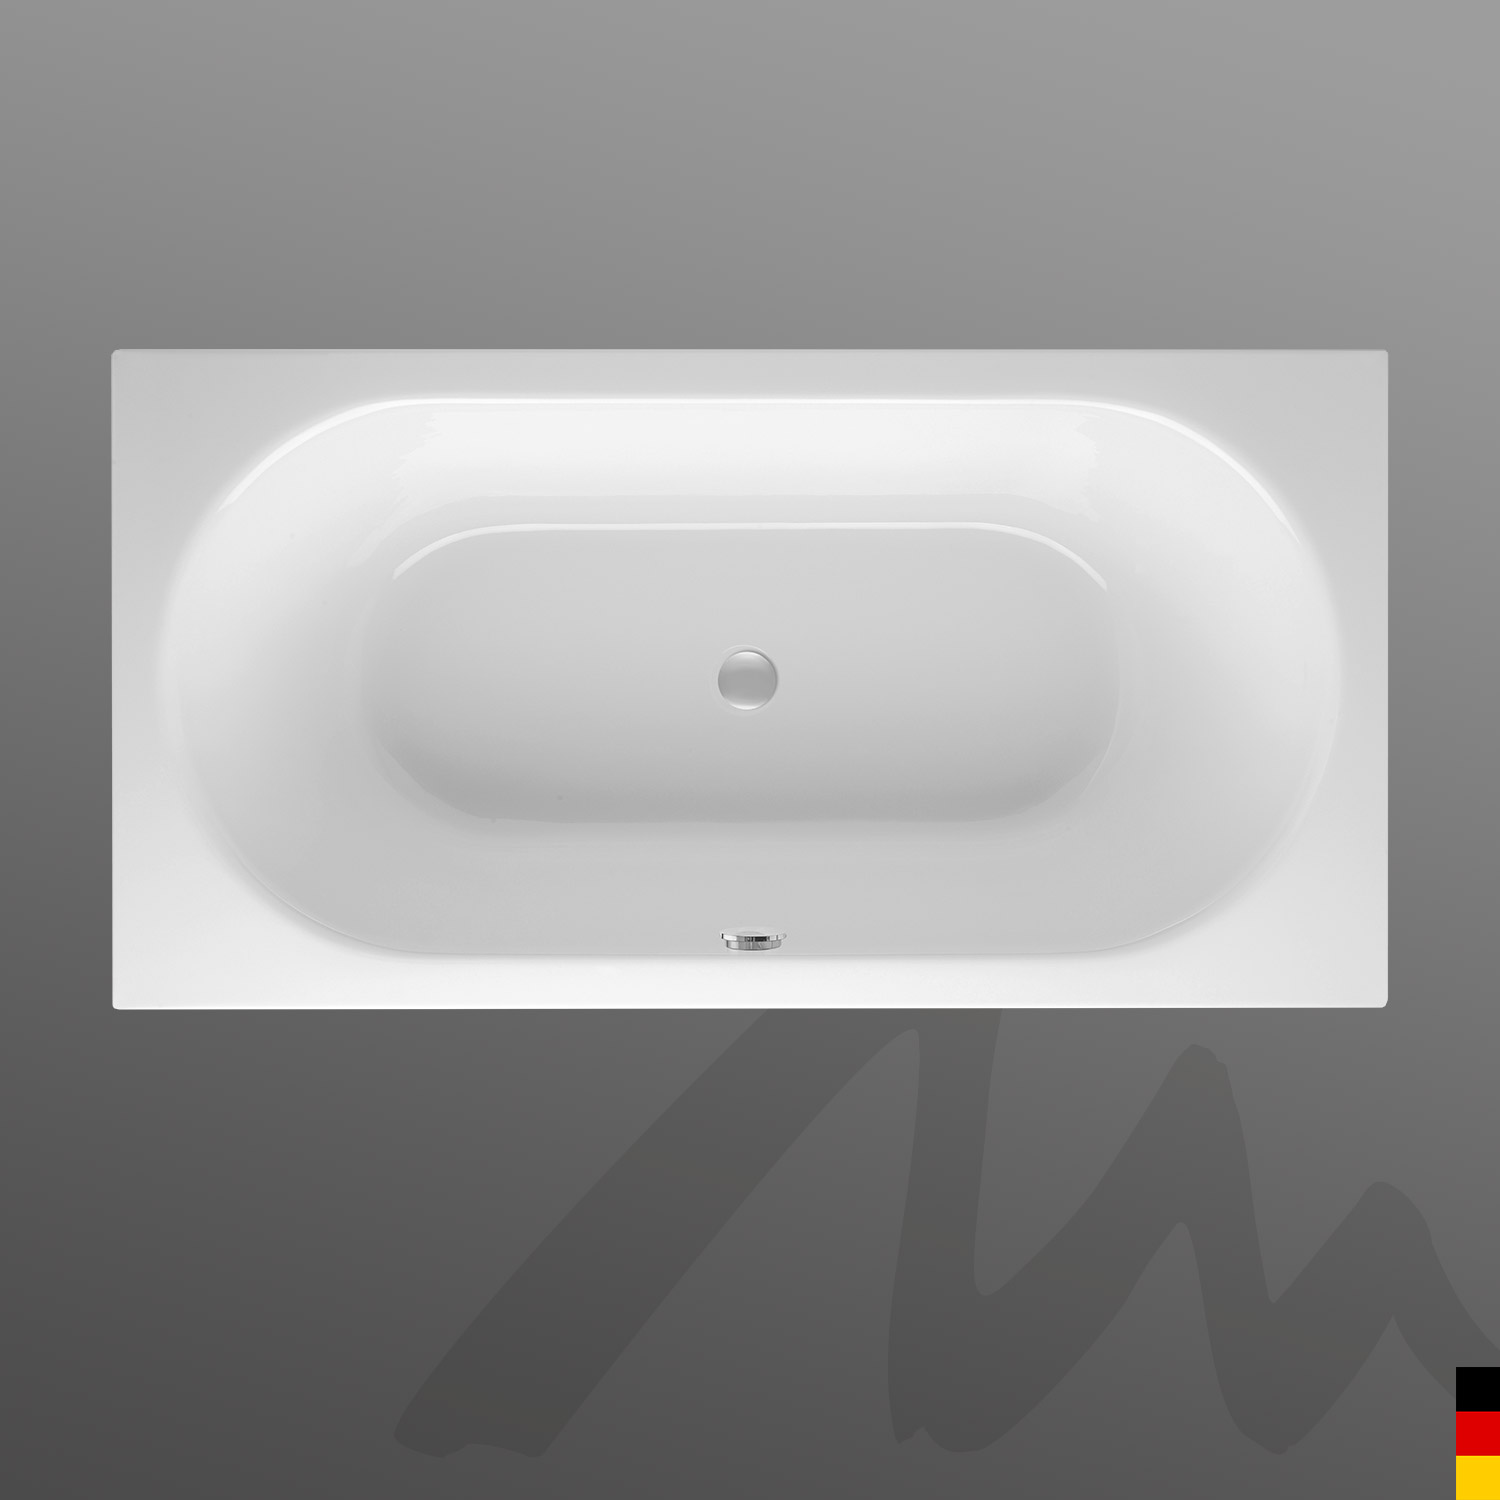 Mauersberger Badewanne Rechteck Ausana 170/75 duo  170x75x44cm  Farbe:weiß